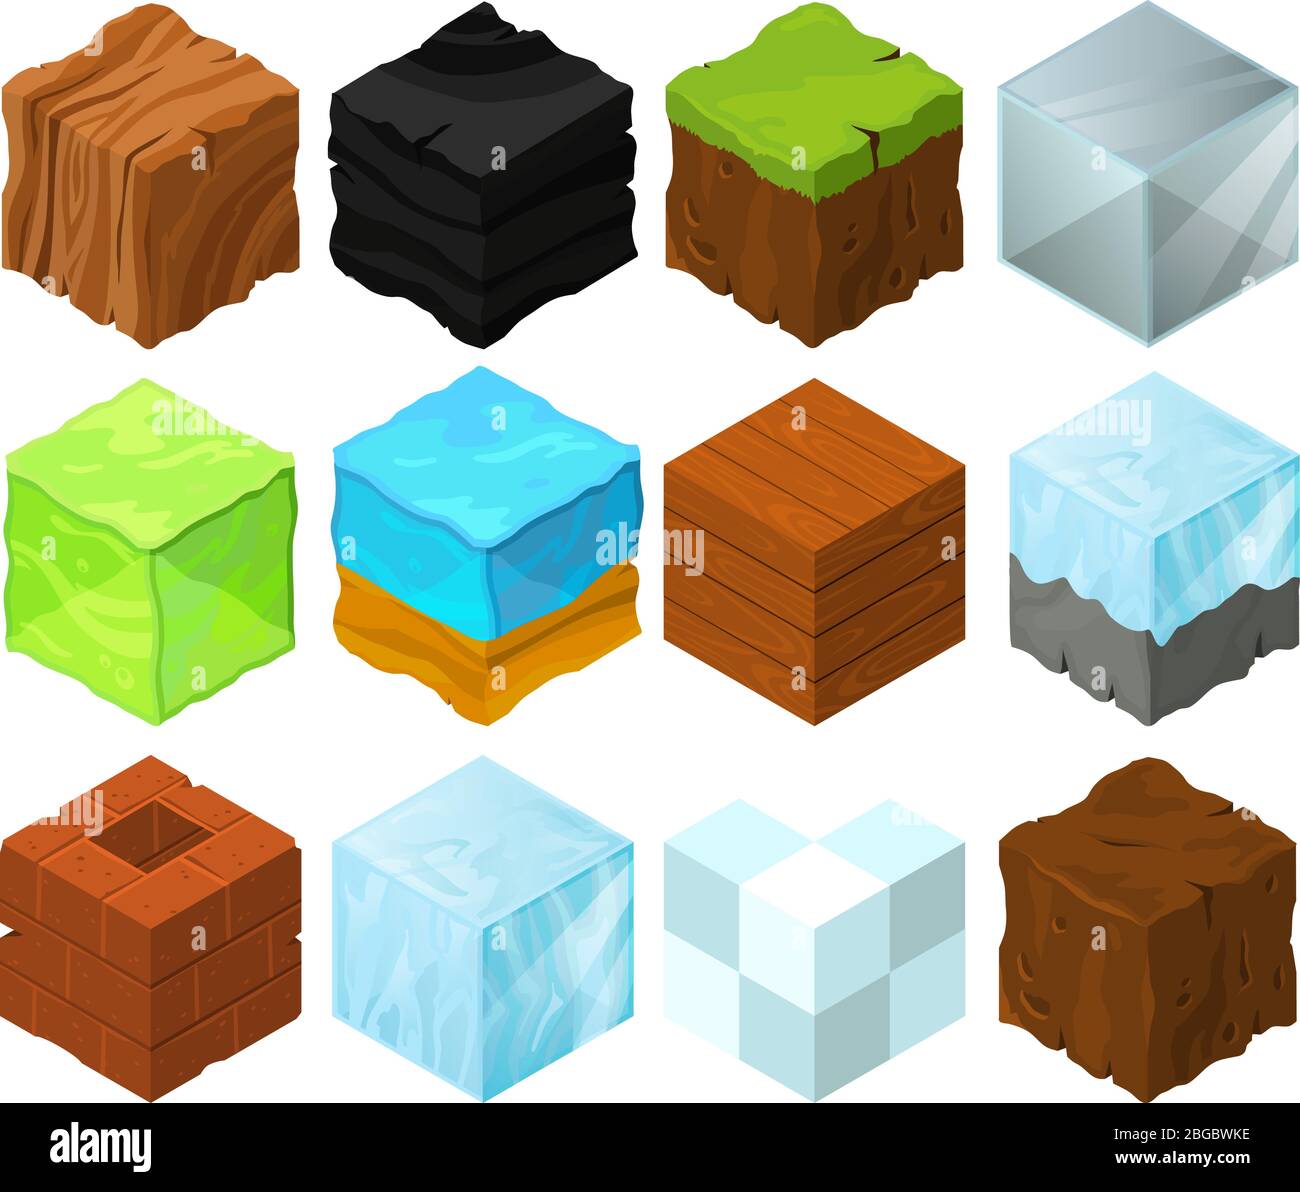 Cartoon texture illustration on different isometric blocks for game design Stock Vector